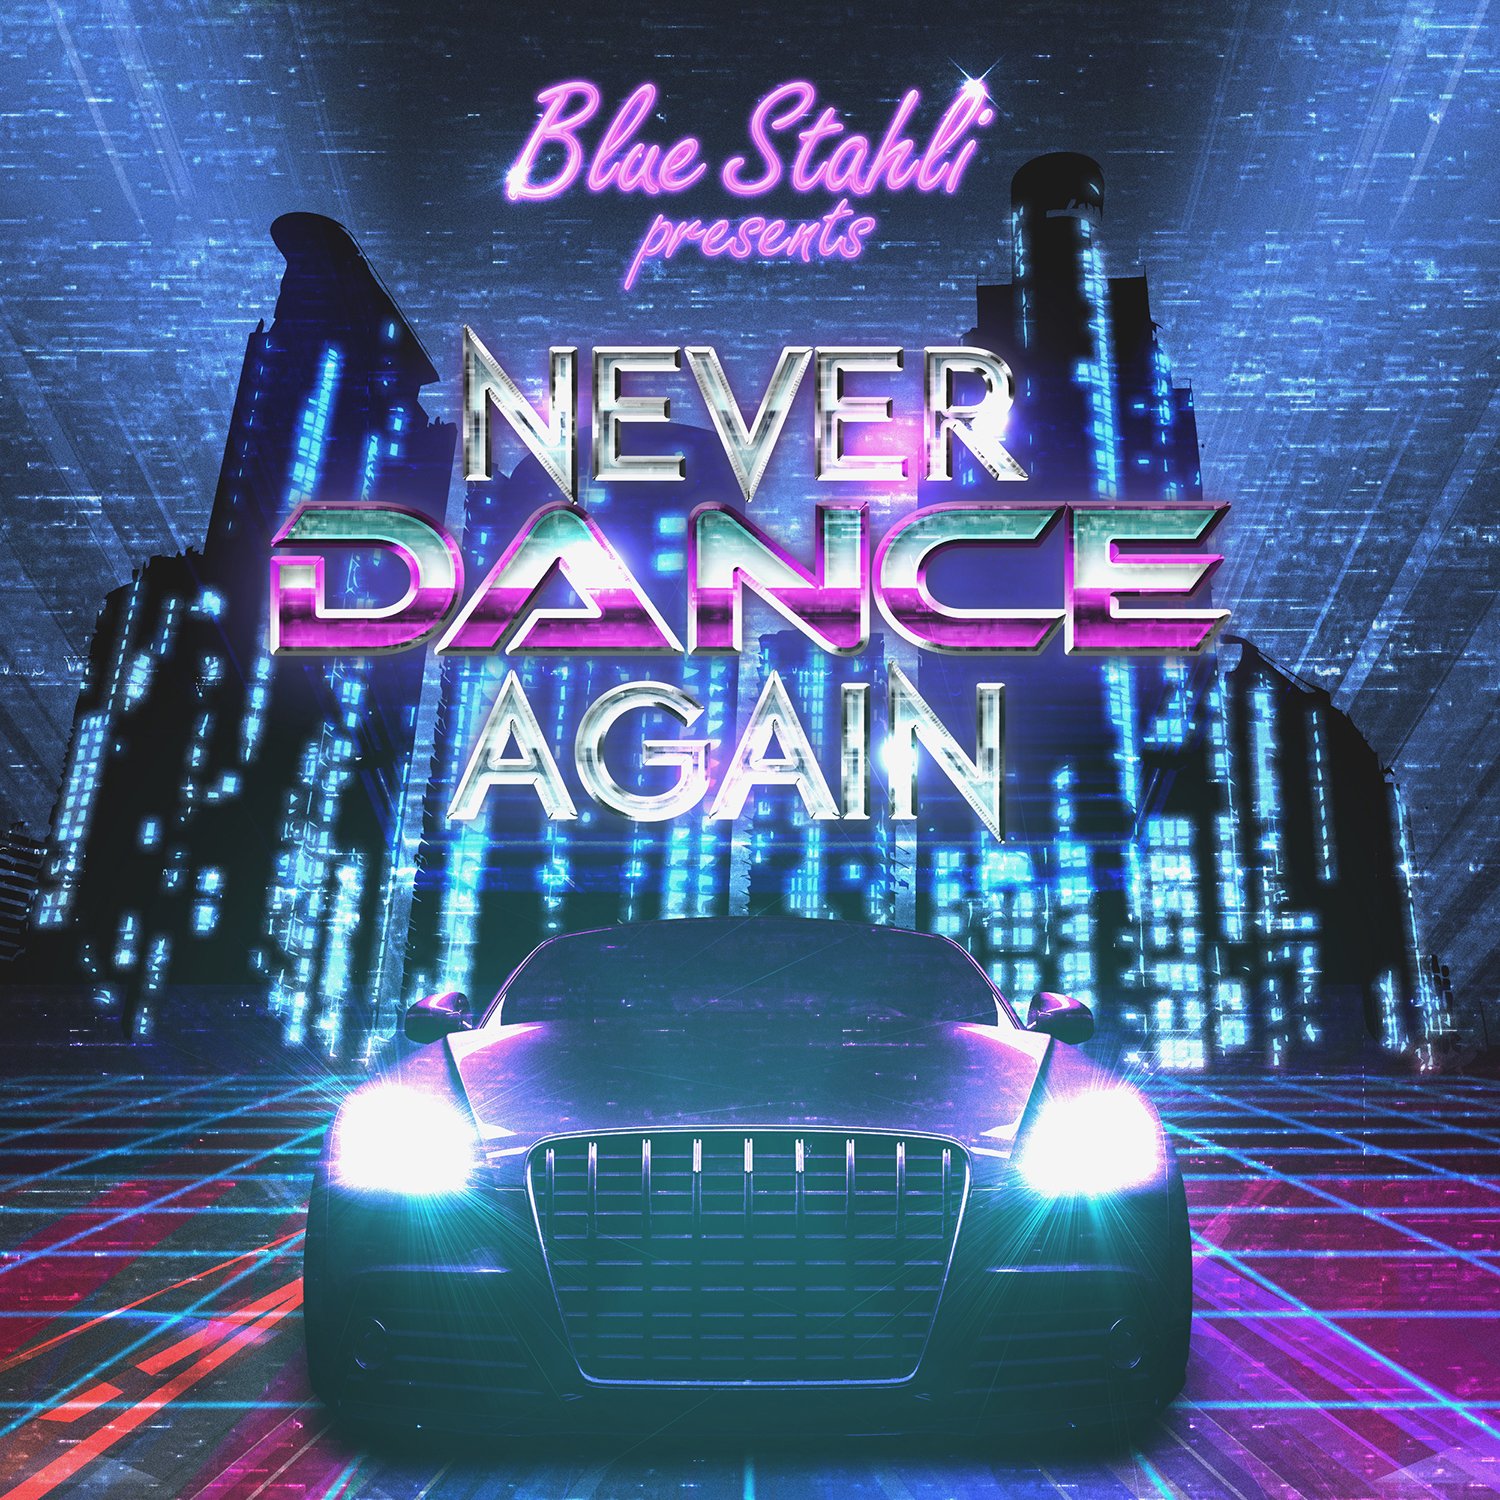 Blue again. Never Dance again. Blue Stahli. I never Dance again. Never never Dancing.